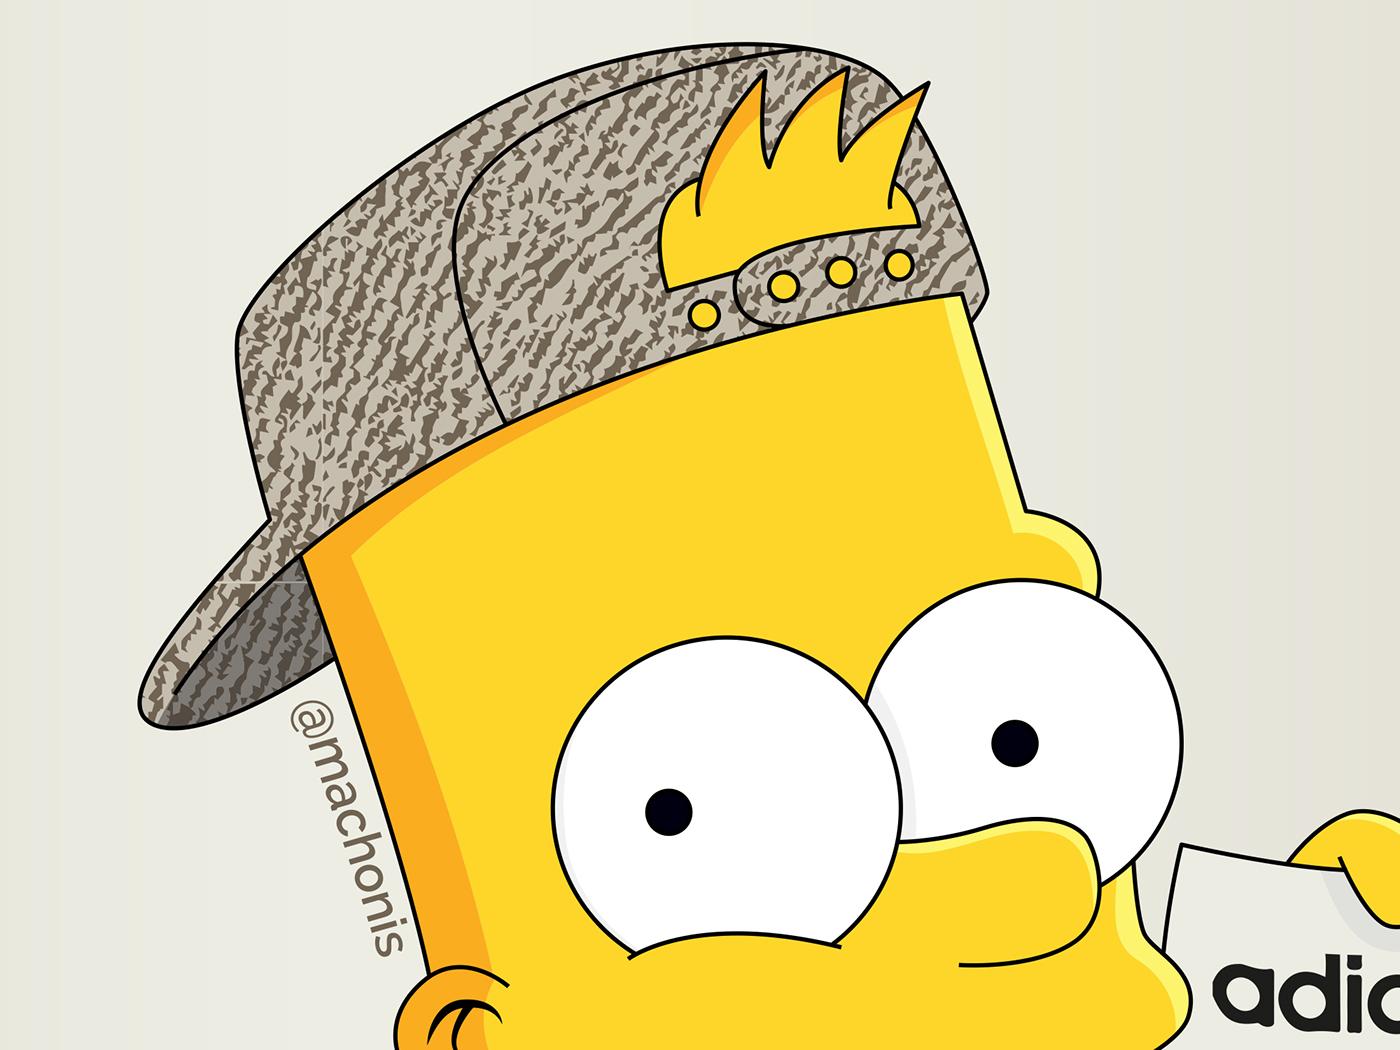 Bart Simpson x Yeezy Boost 350 Oxford Tan